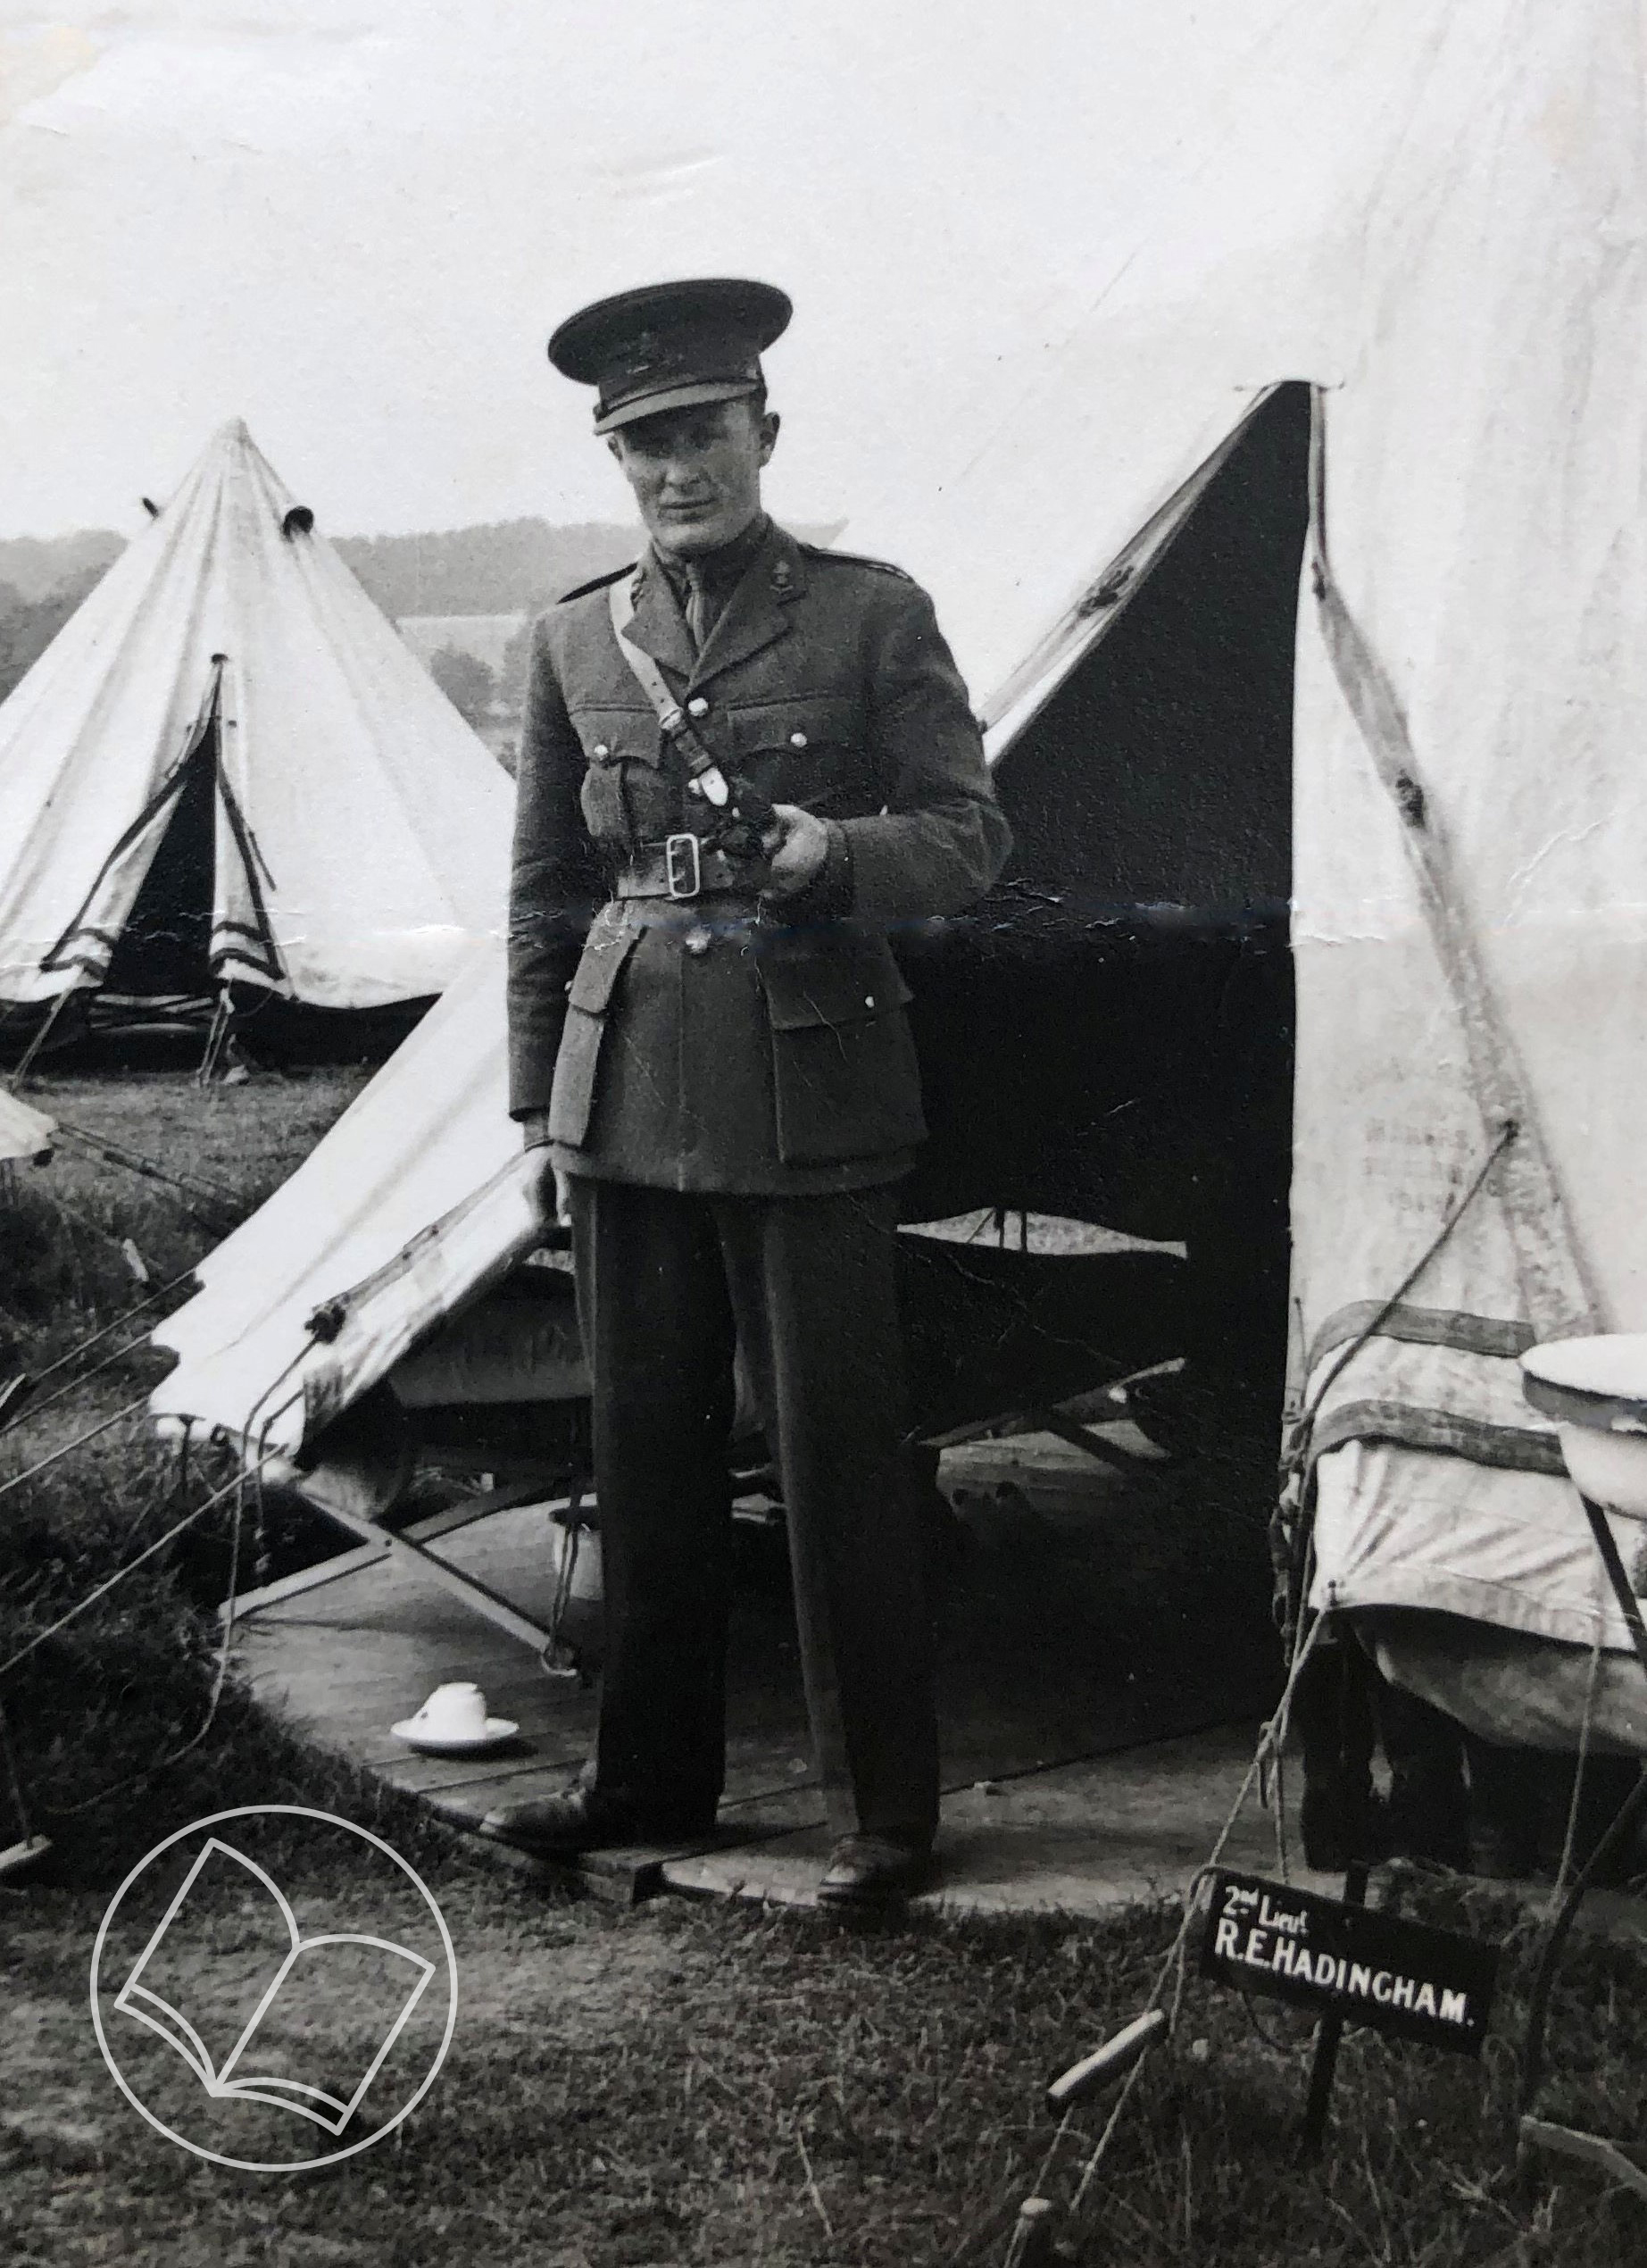 R.E.H. at Tilshead Camp, August 1939